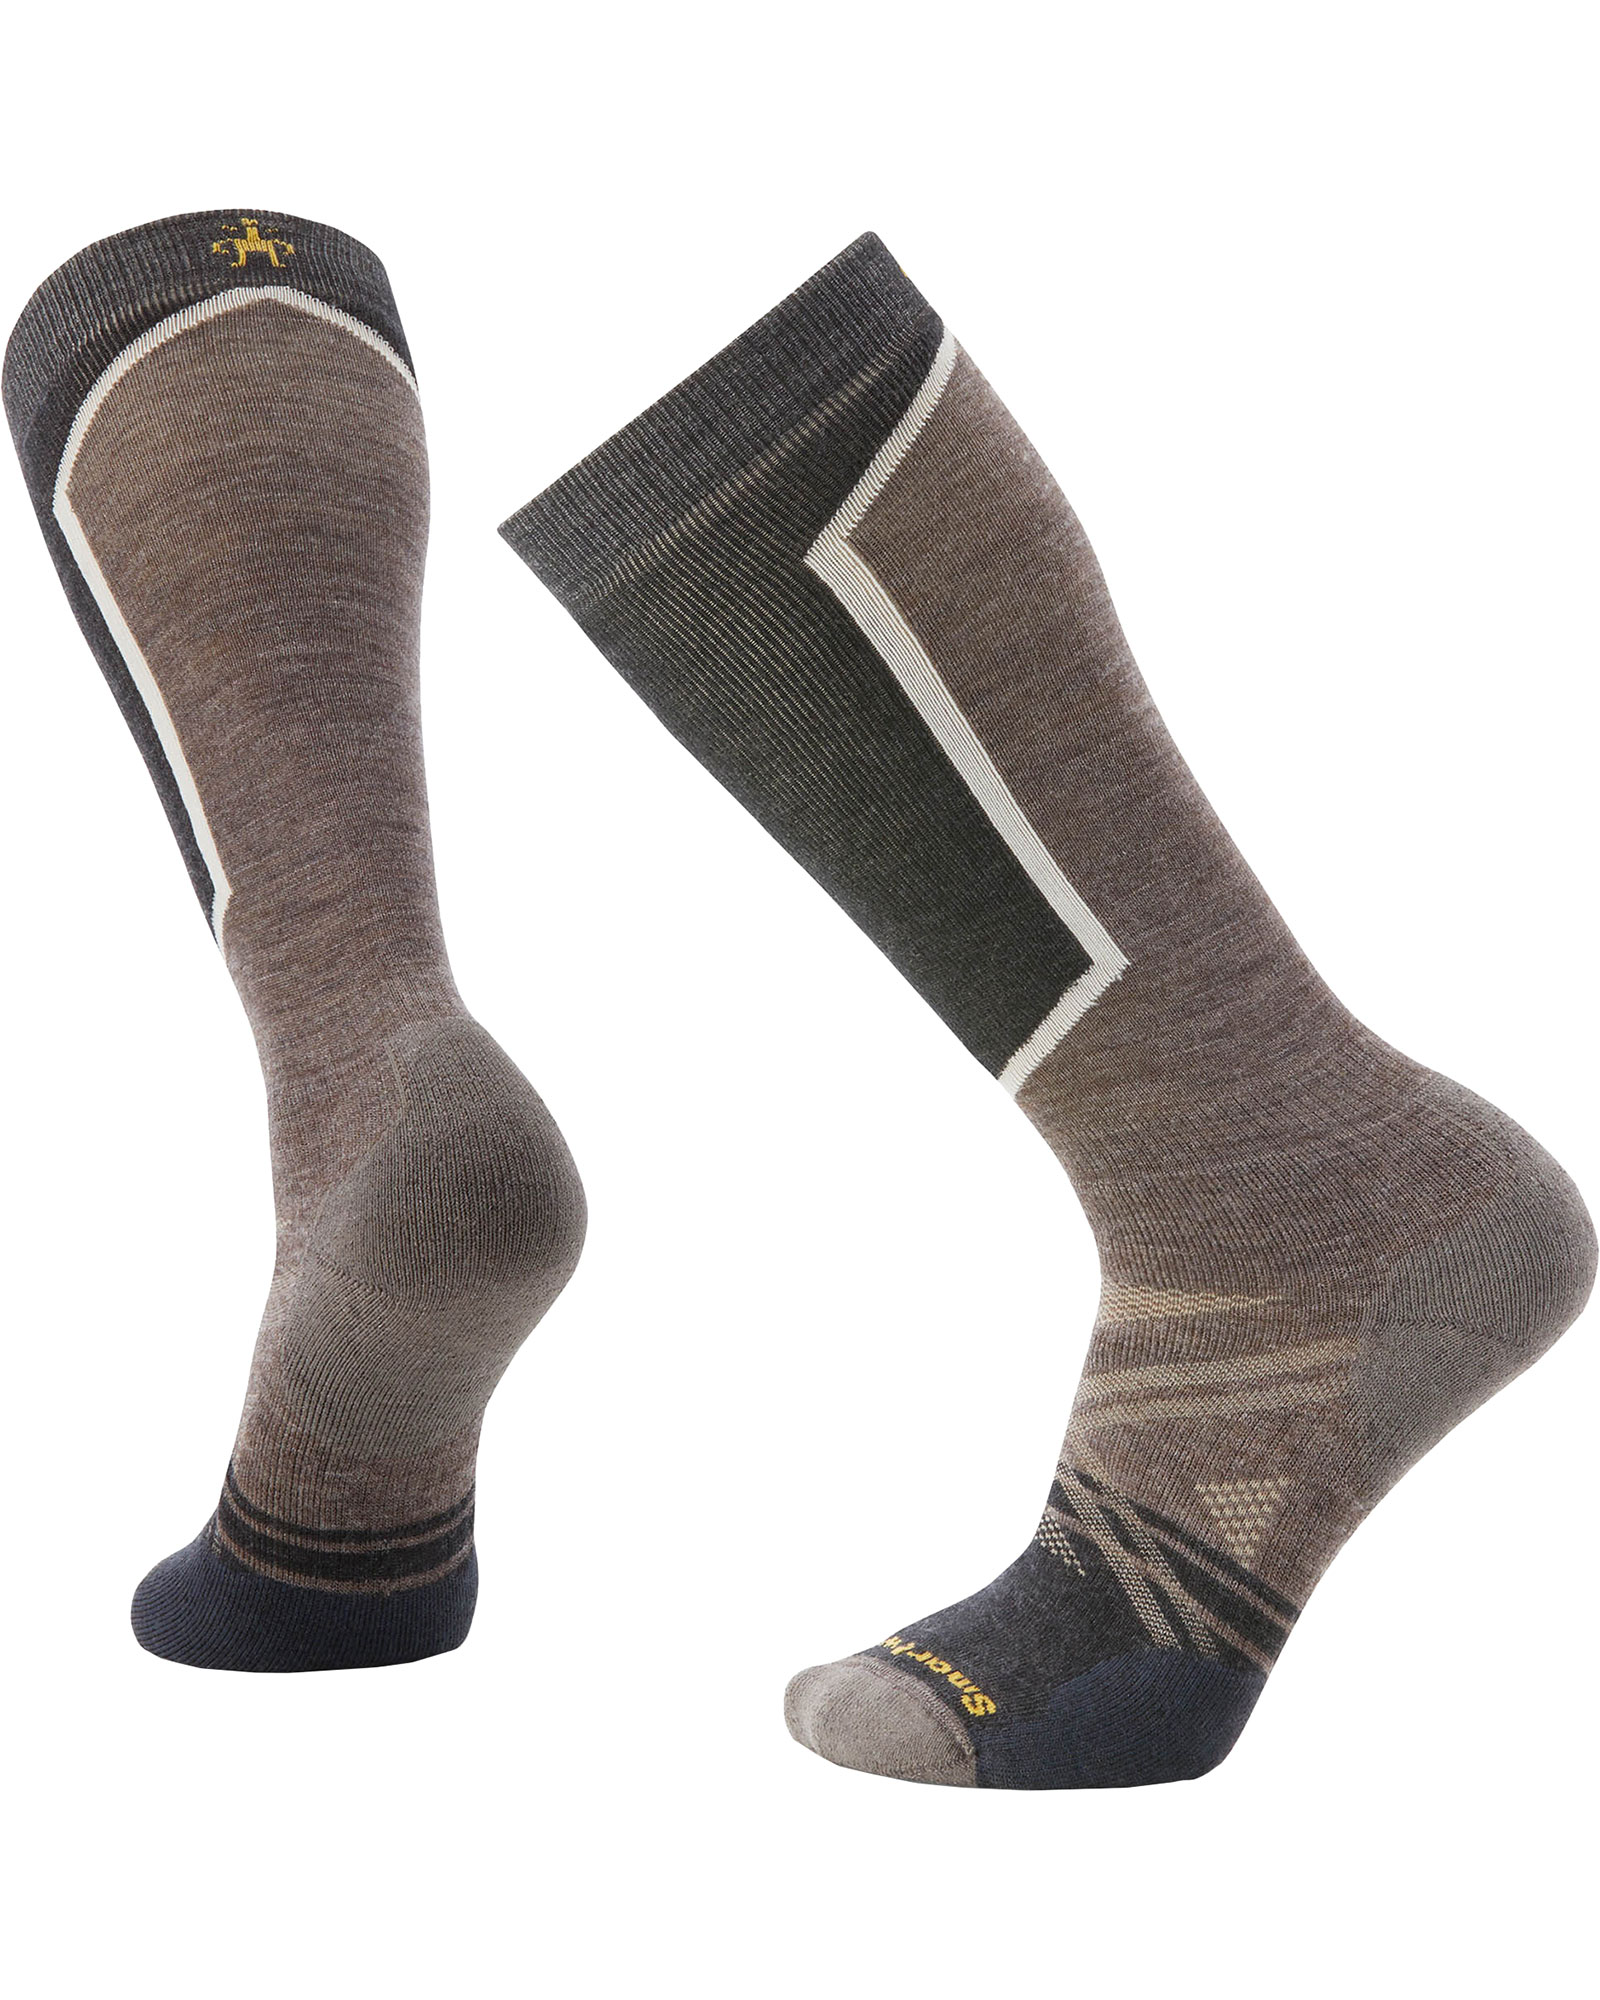 Smartwool Full Cushion Ski Socks - Taupe XL